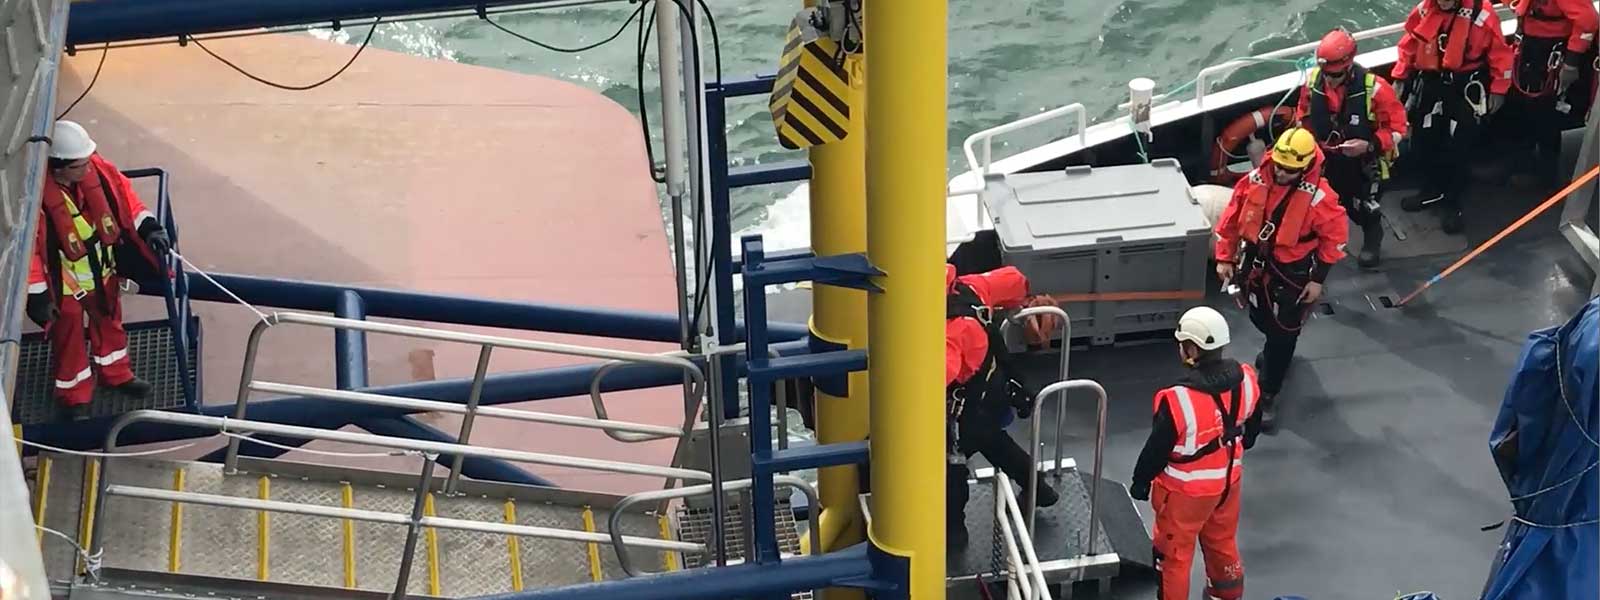 Bridgemans offers crew change vessel for safe alternative for offshore crew changes